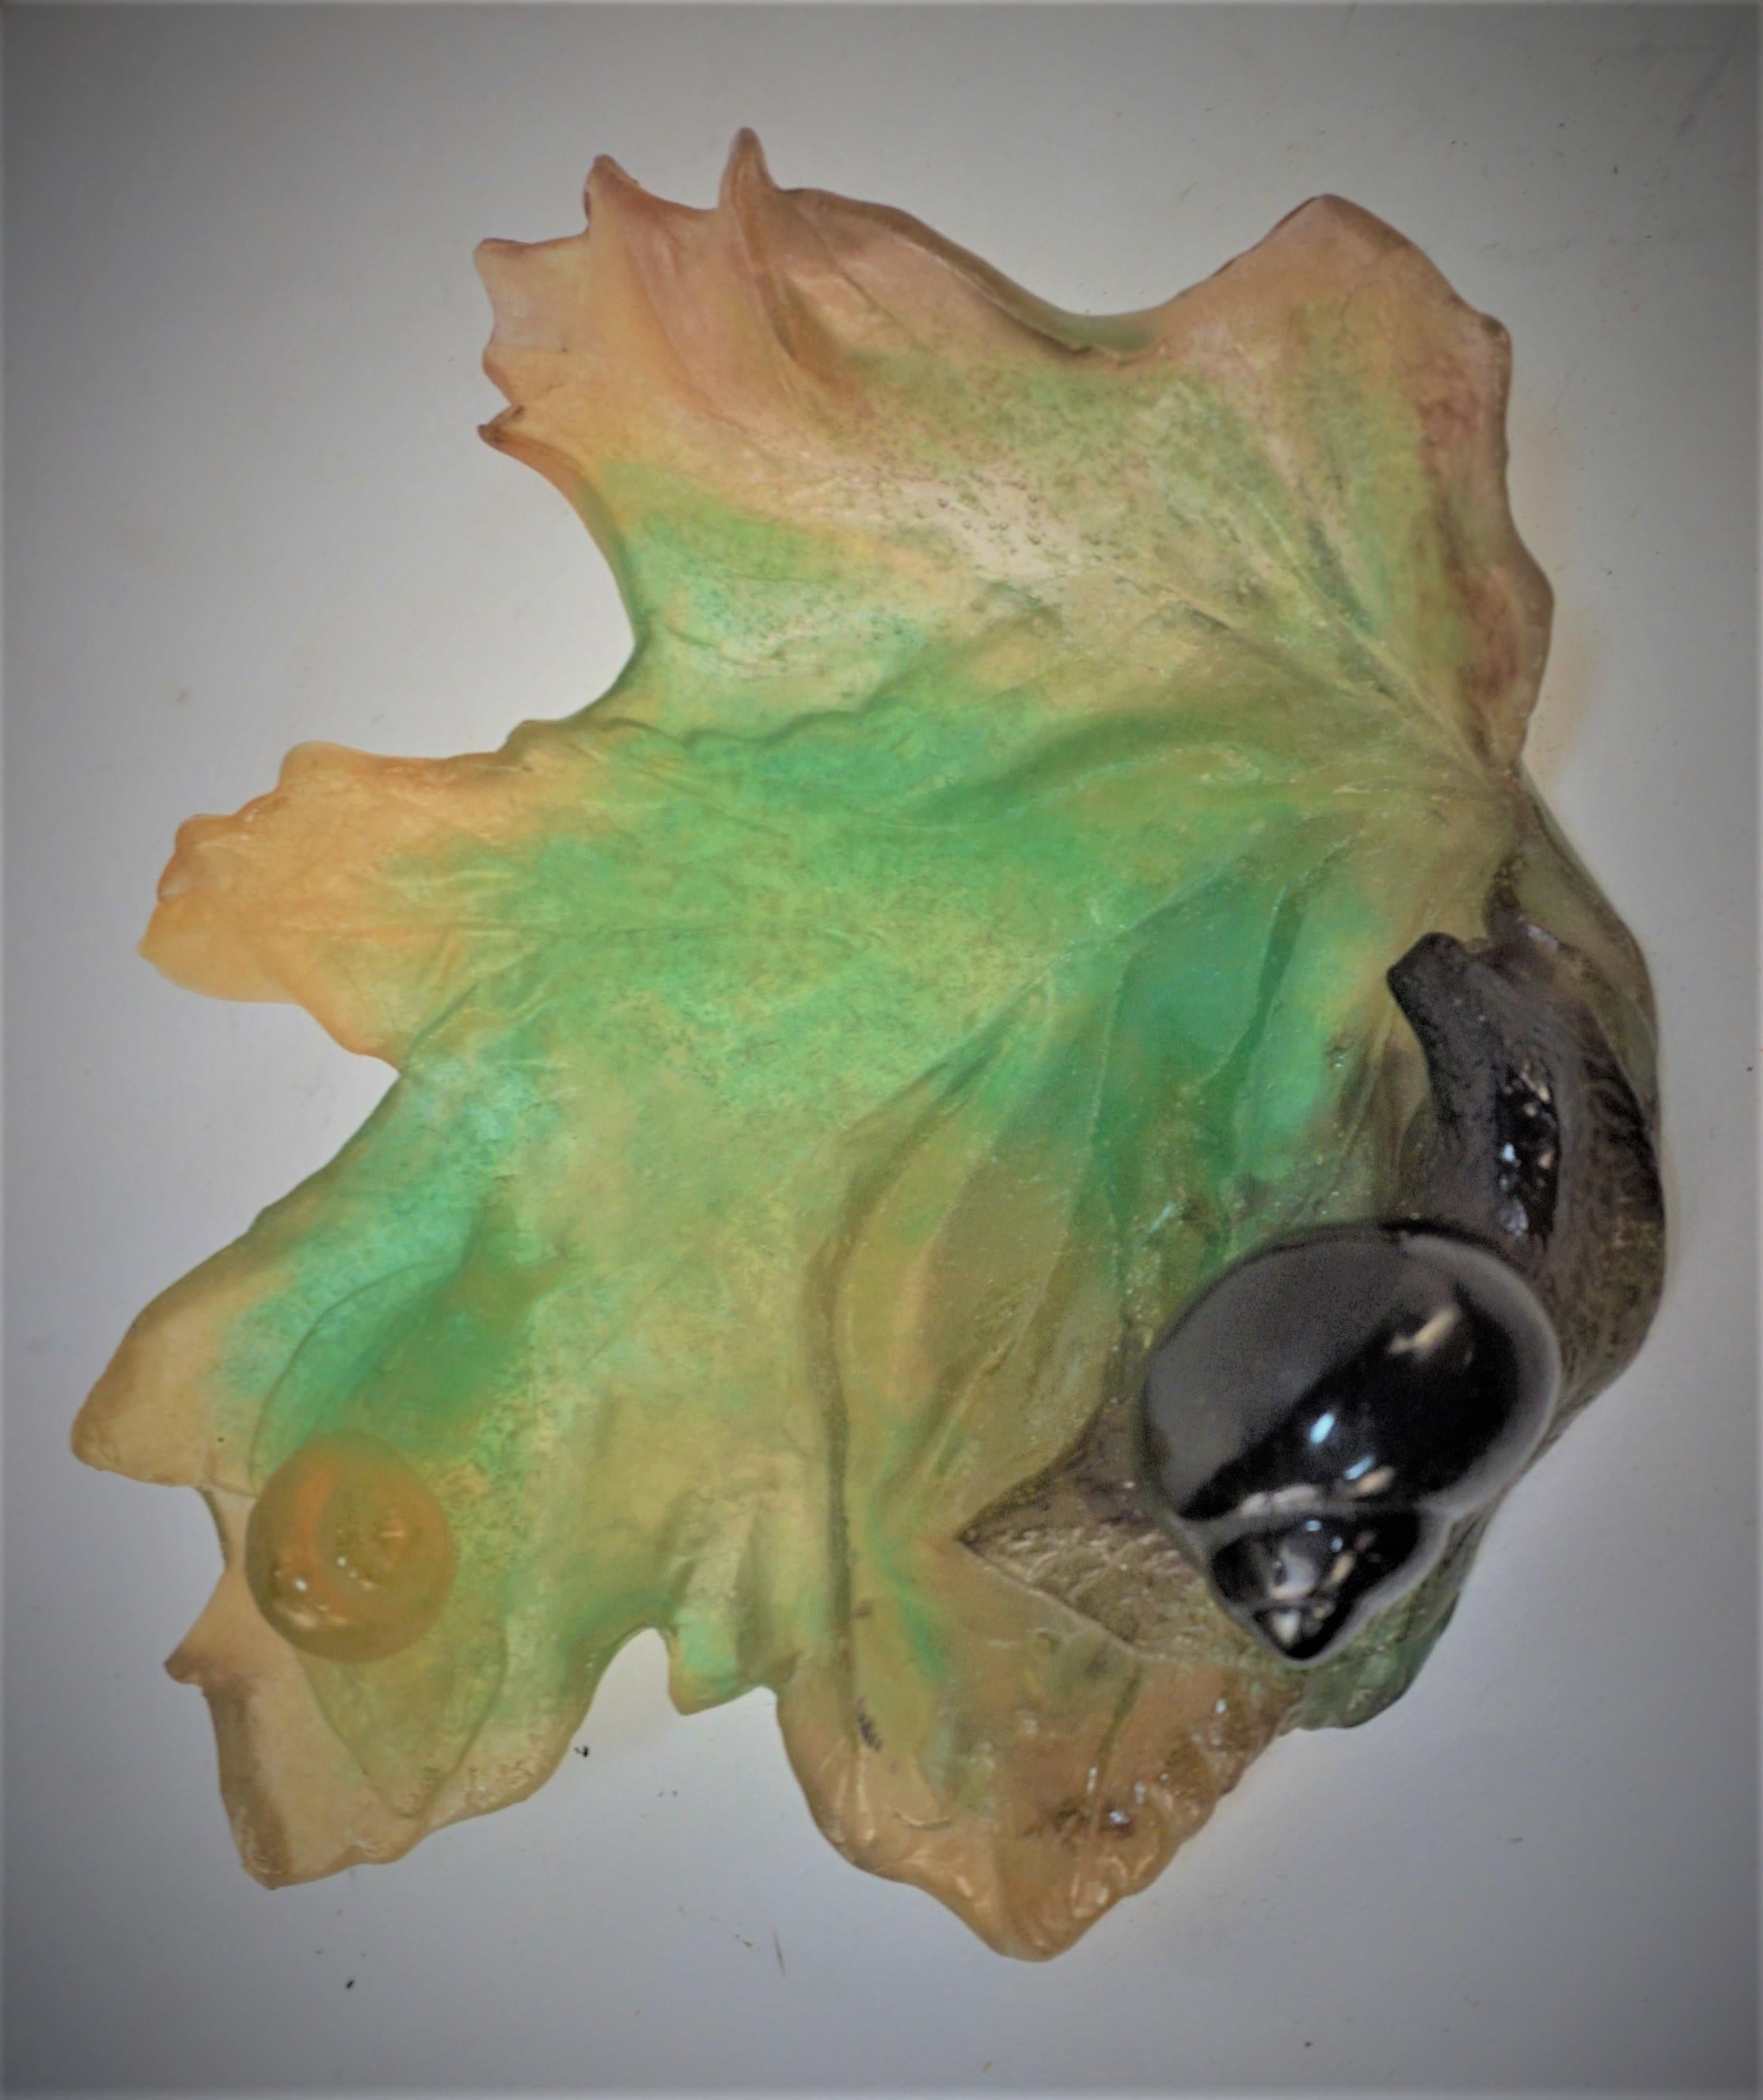 Daum multi color glass pate de verre with two snails upon a leaf.